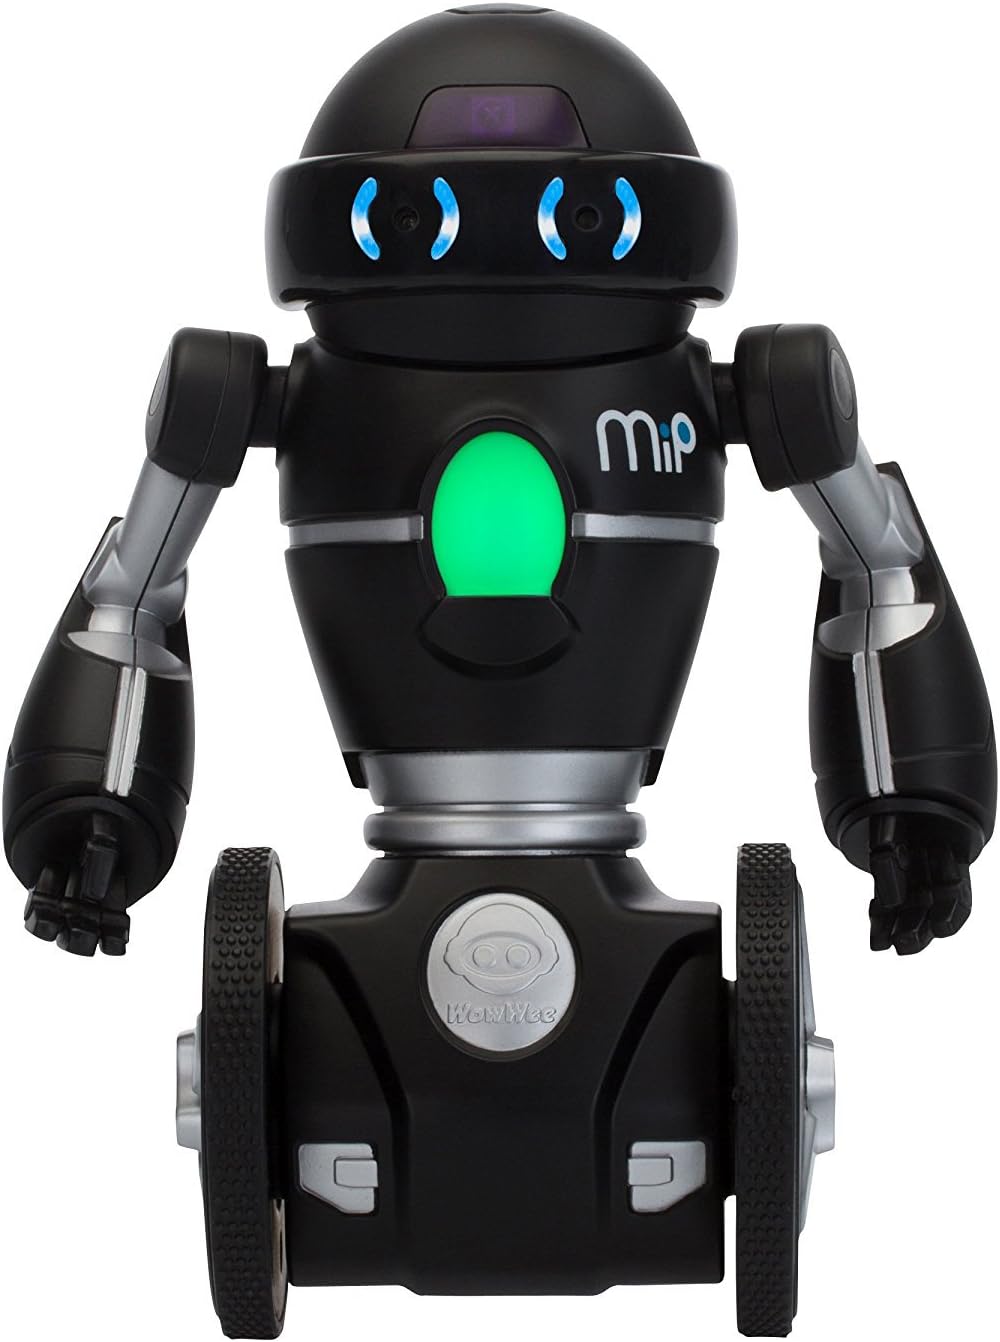 WowWee MiP Robot - Black/Silver